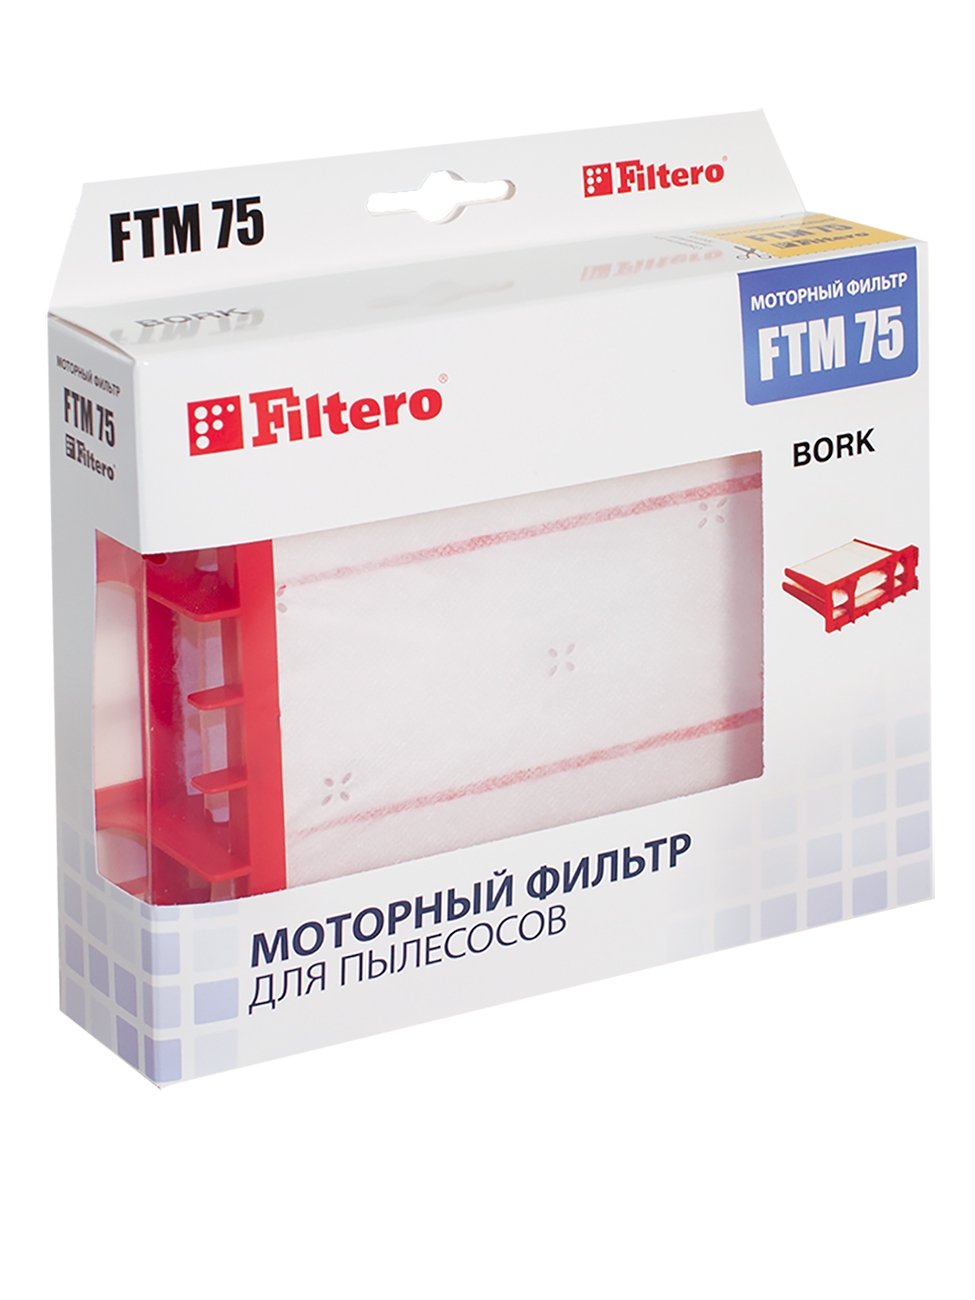 Фильтр моторный Filtero FTM 75 BRK Bork